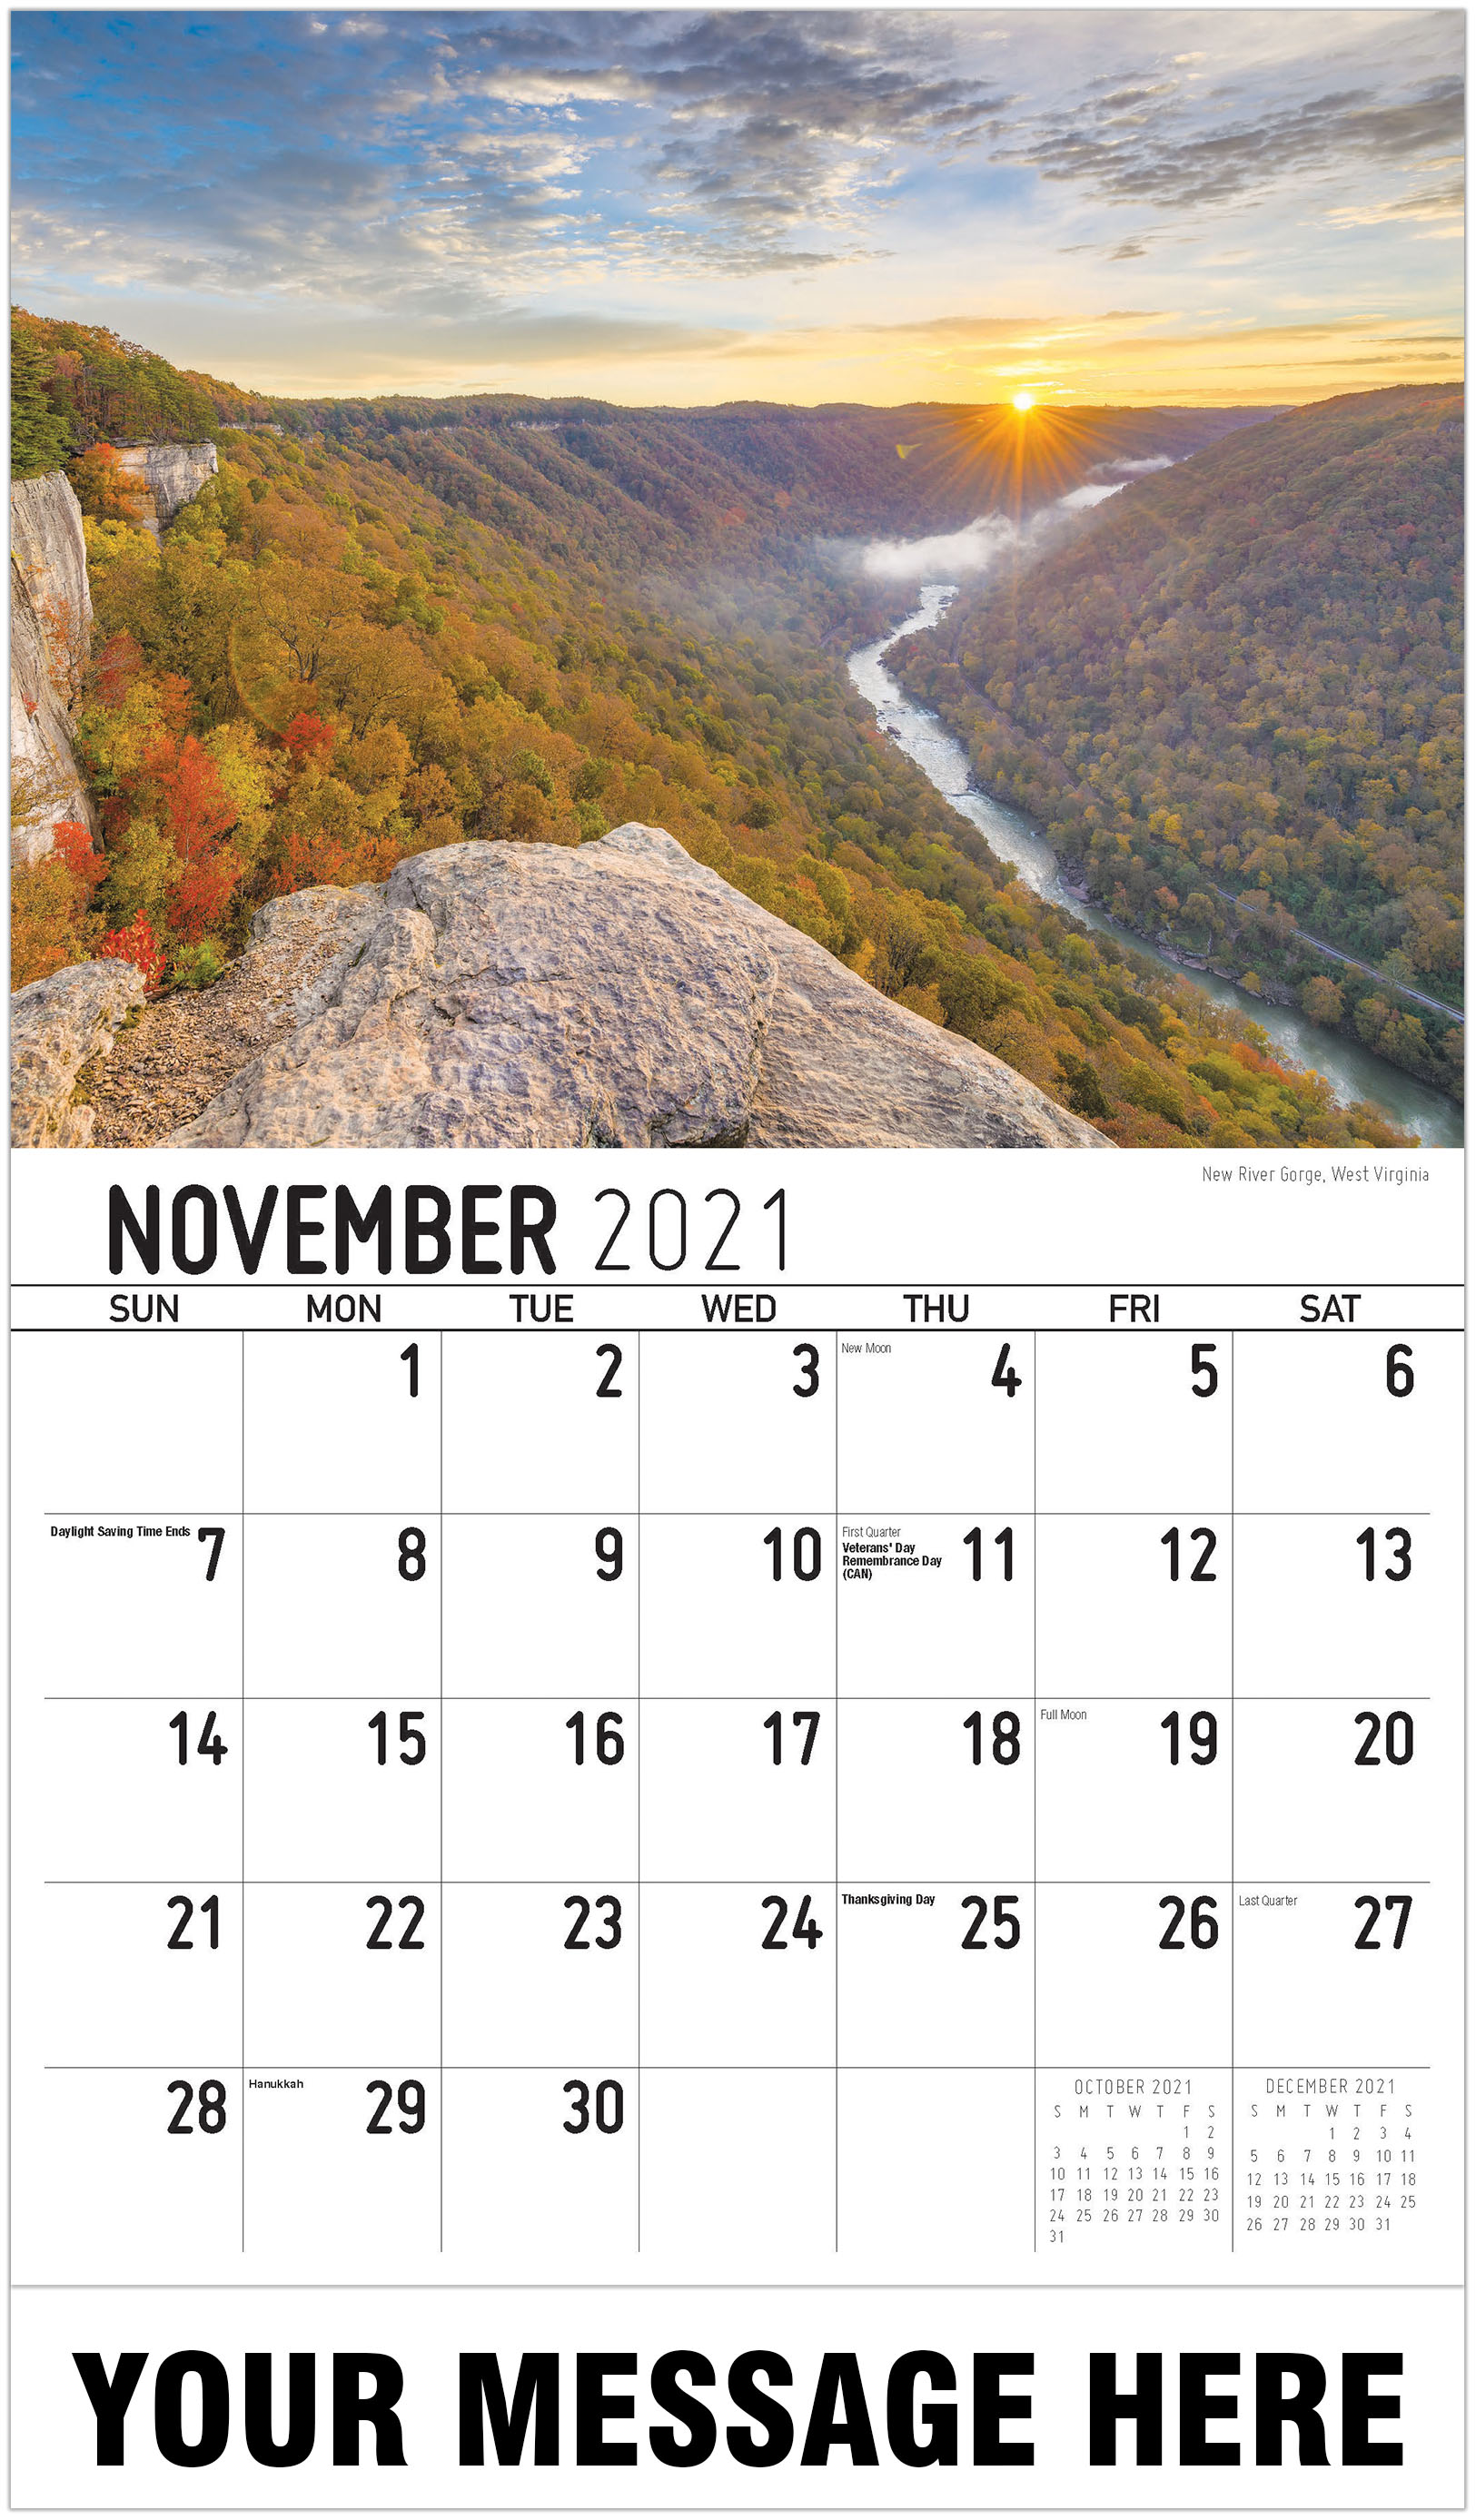 2021 Southeast USA Scenic Calendar Business Promotional Calendar